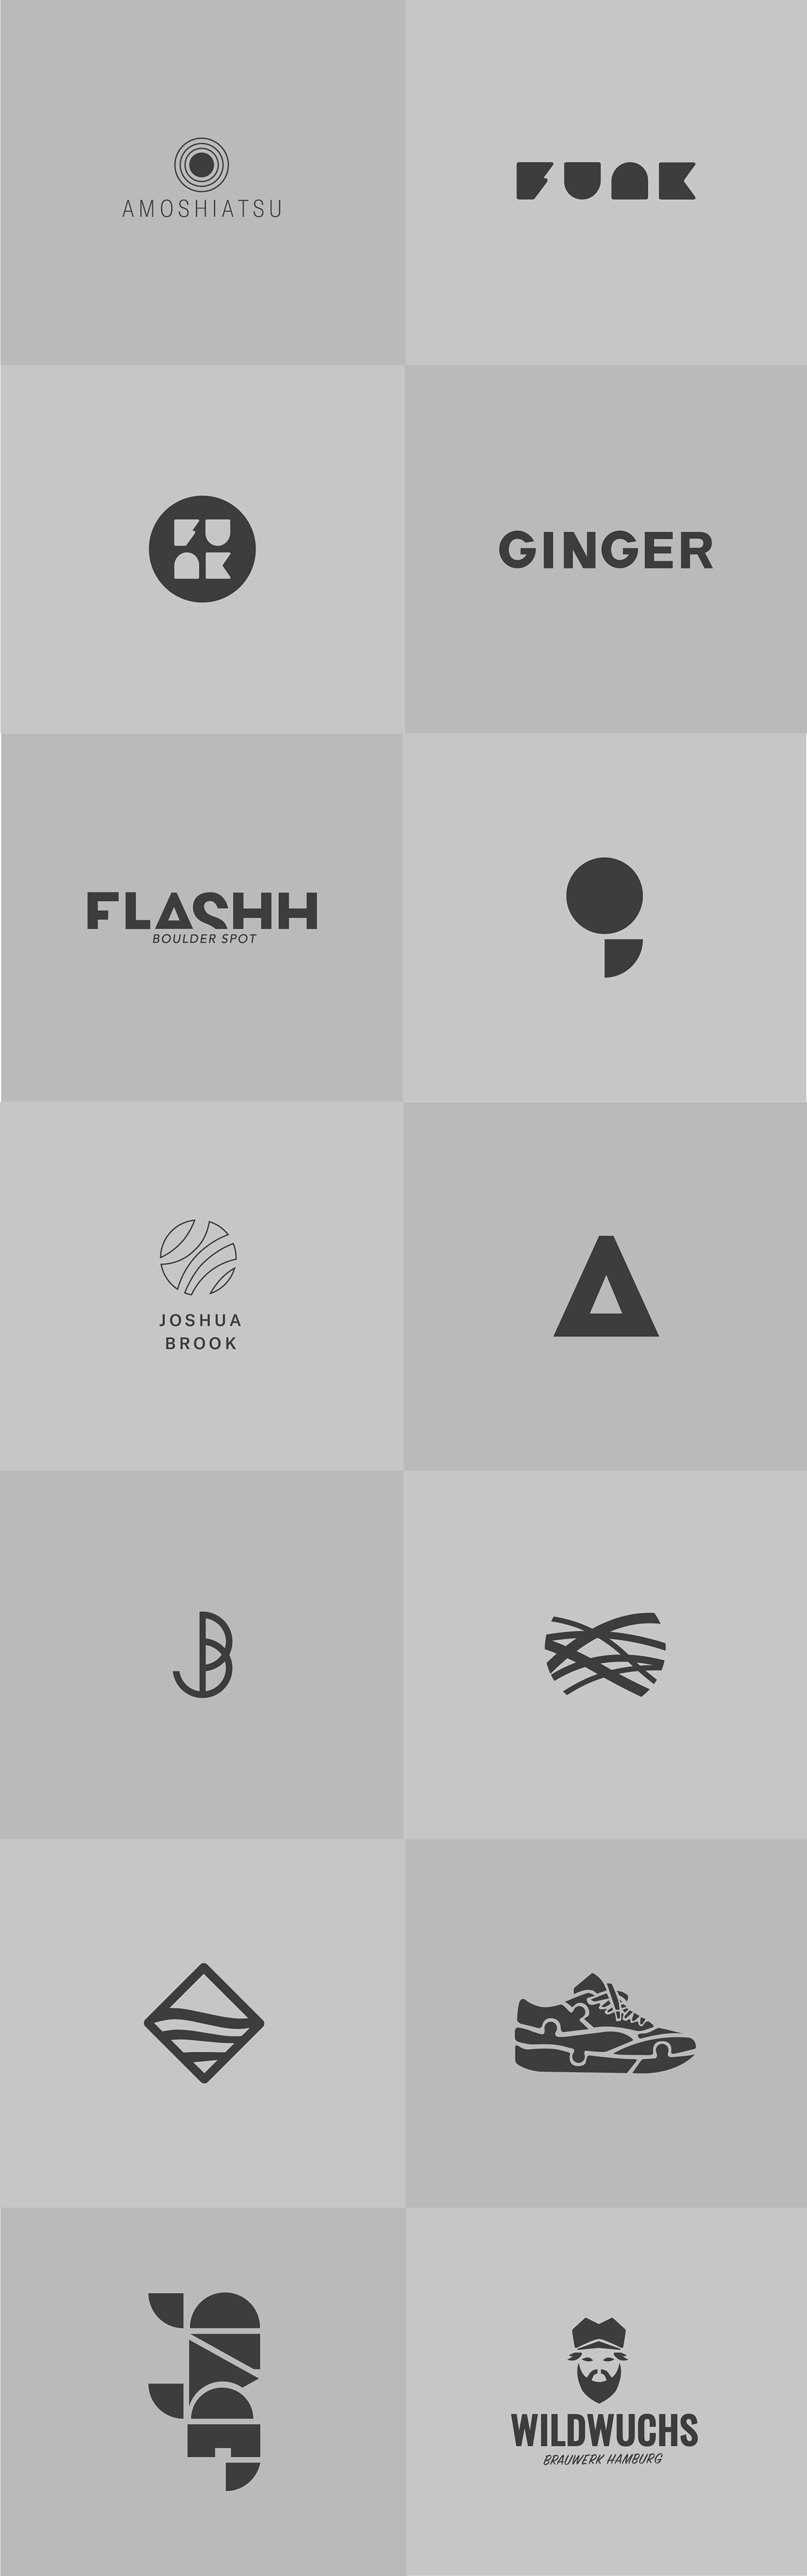 design minimal logos monochrome icons brand branding  graphic design  minimilist Forms